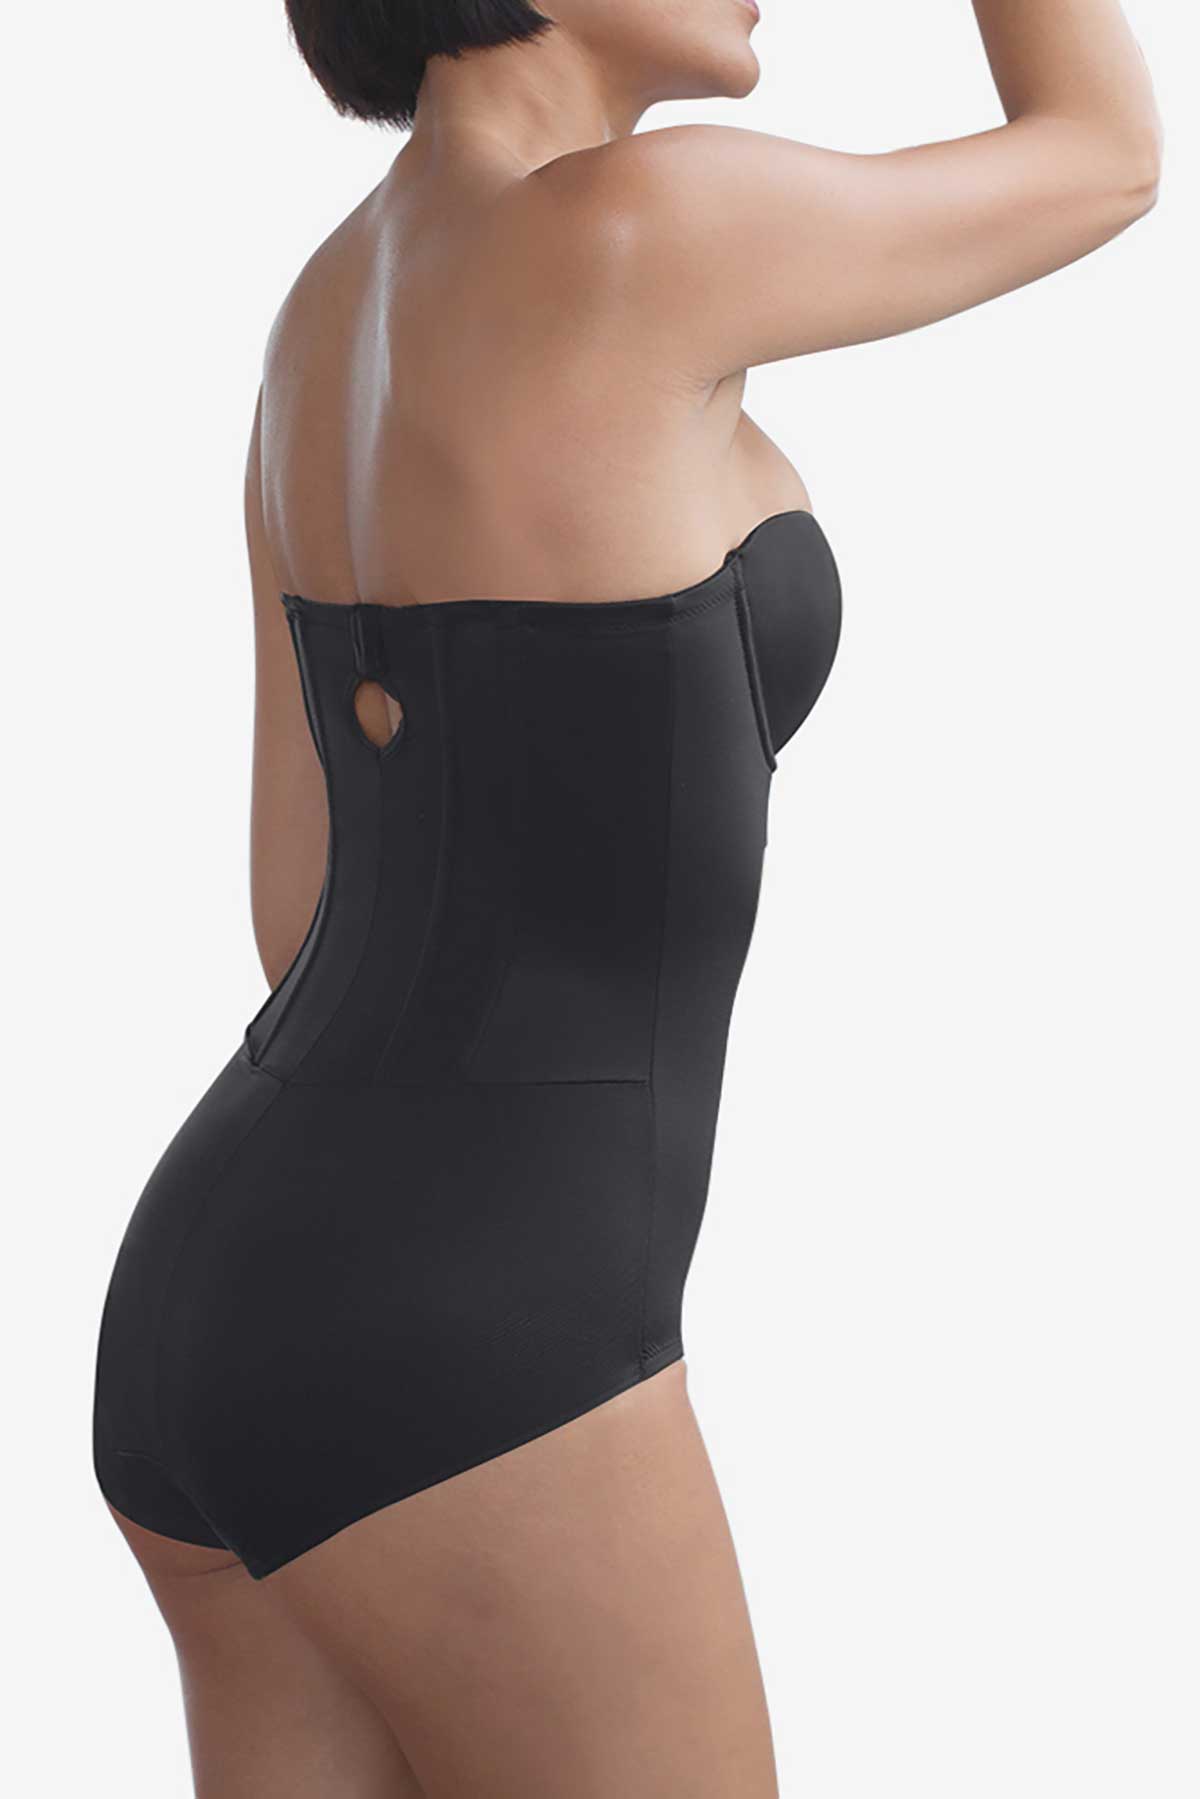 Lynclare Strapless Shapewear Bodysuit Body Shaper Tummy Control